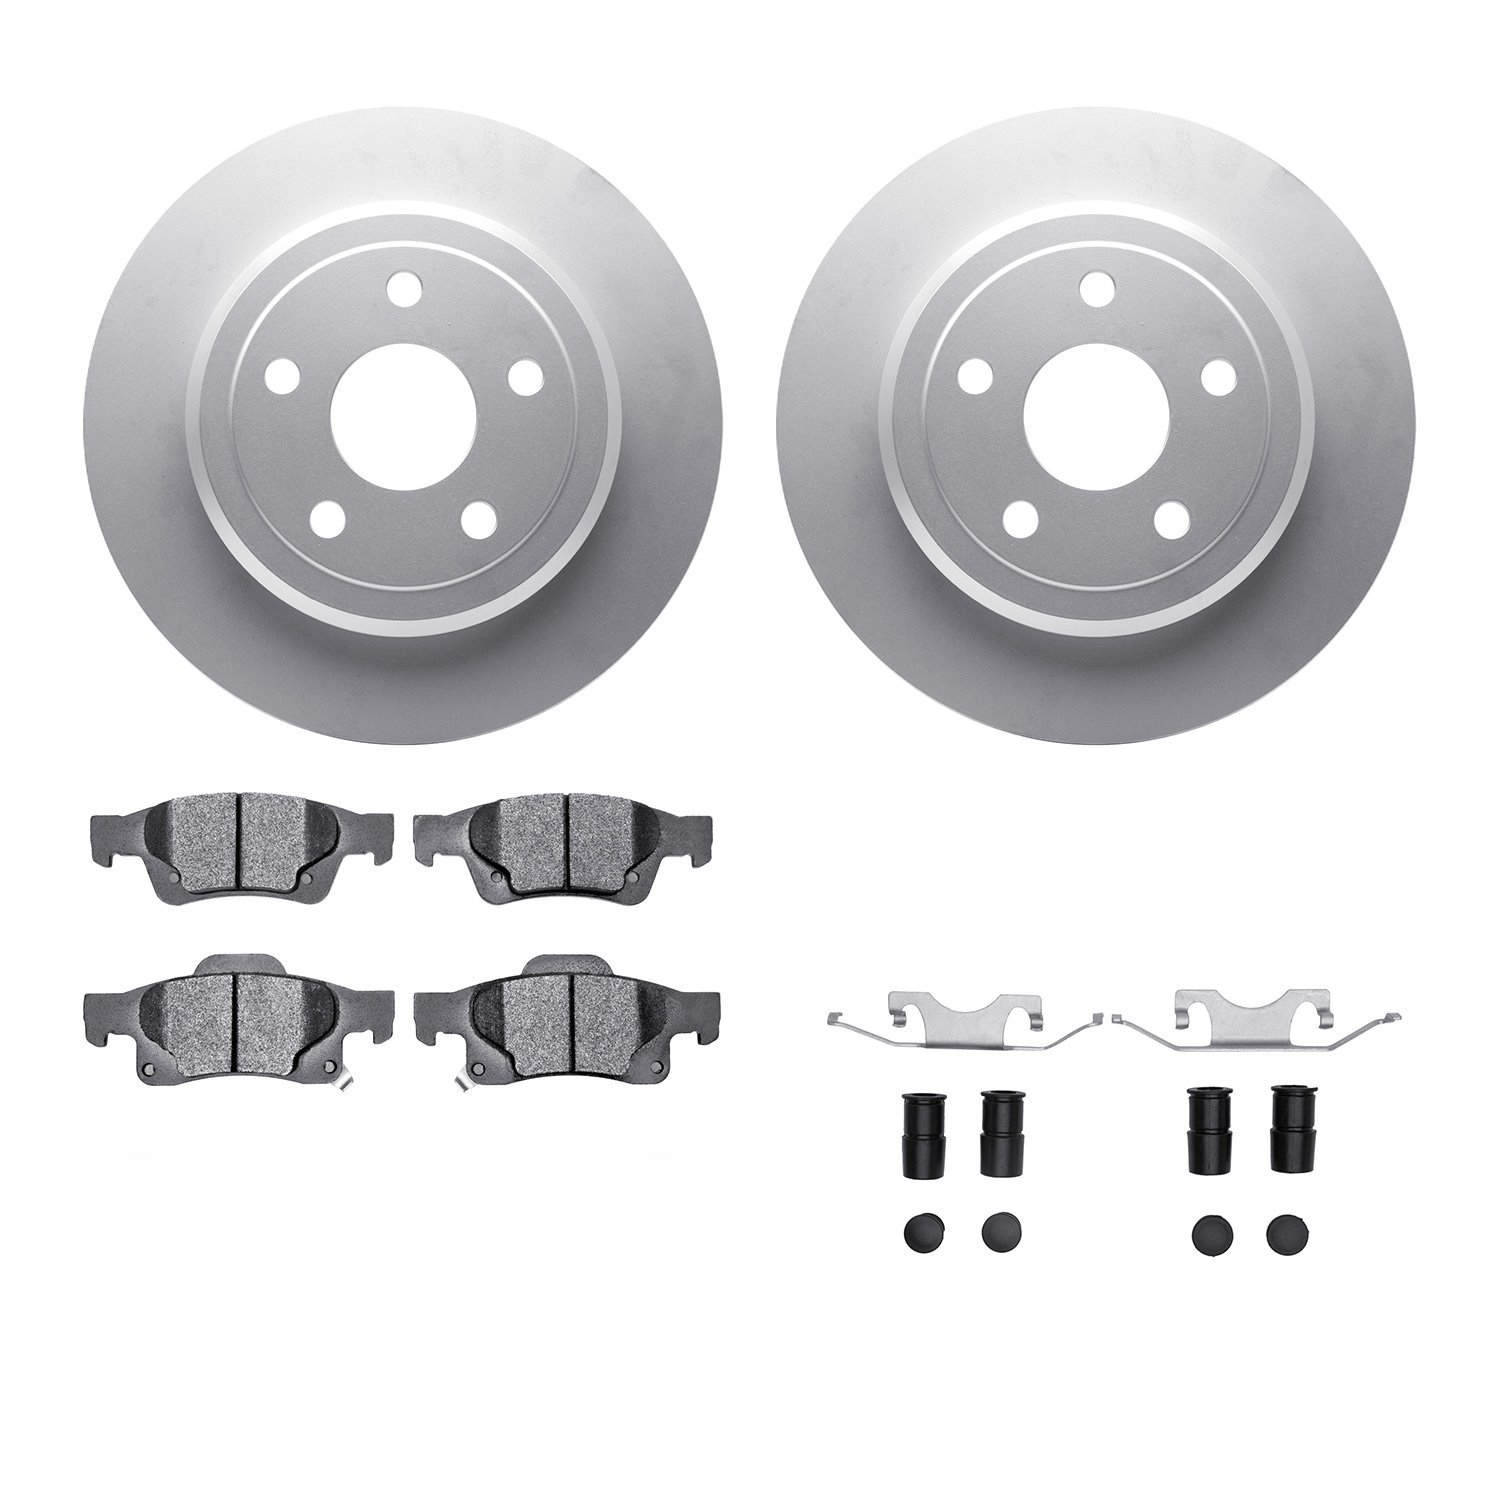 4312-42023 Geospec Brake Rotors with 3000-Series Ceramic Brake Pads & Hardware, Fits Select Mopar, Position: Rear